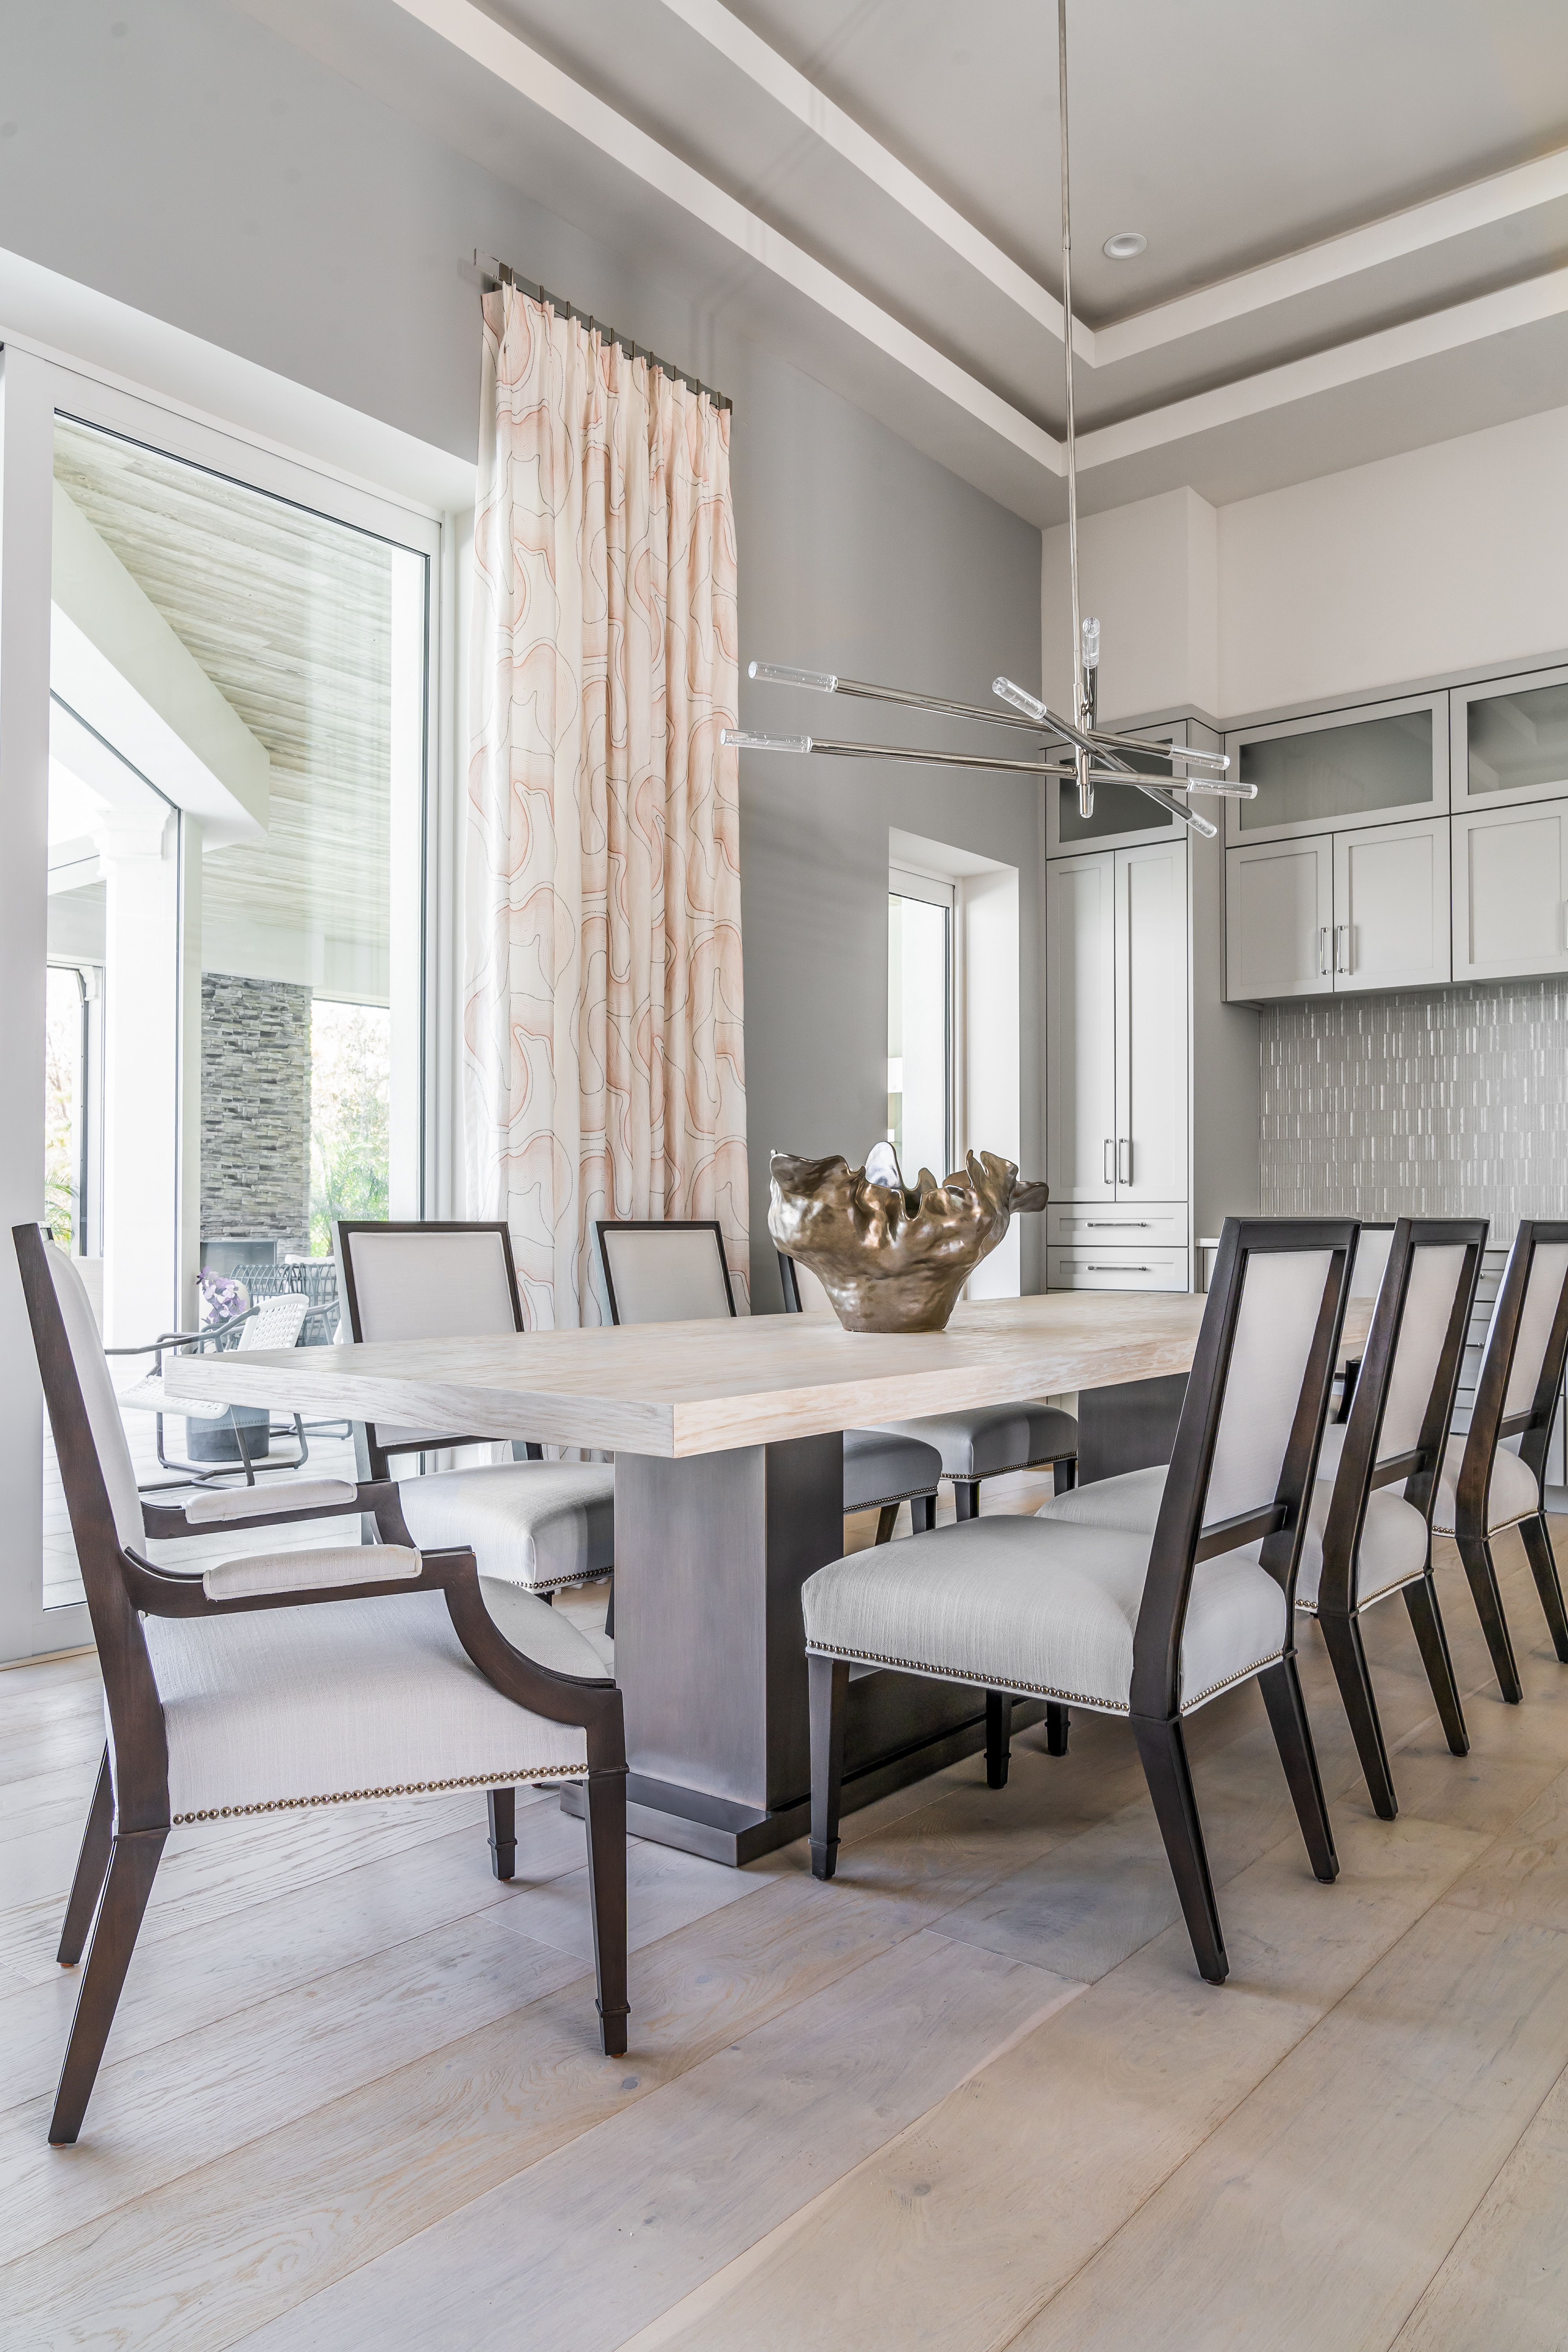 A coastal contemporary dining room design with a neutral palette, designed by Florida interior designer Brooke Meyer of Gulfshore Interior Design